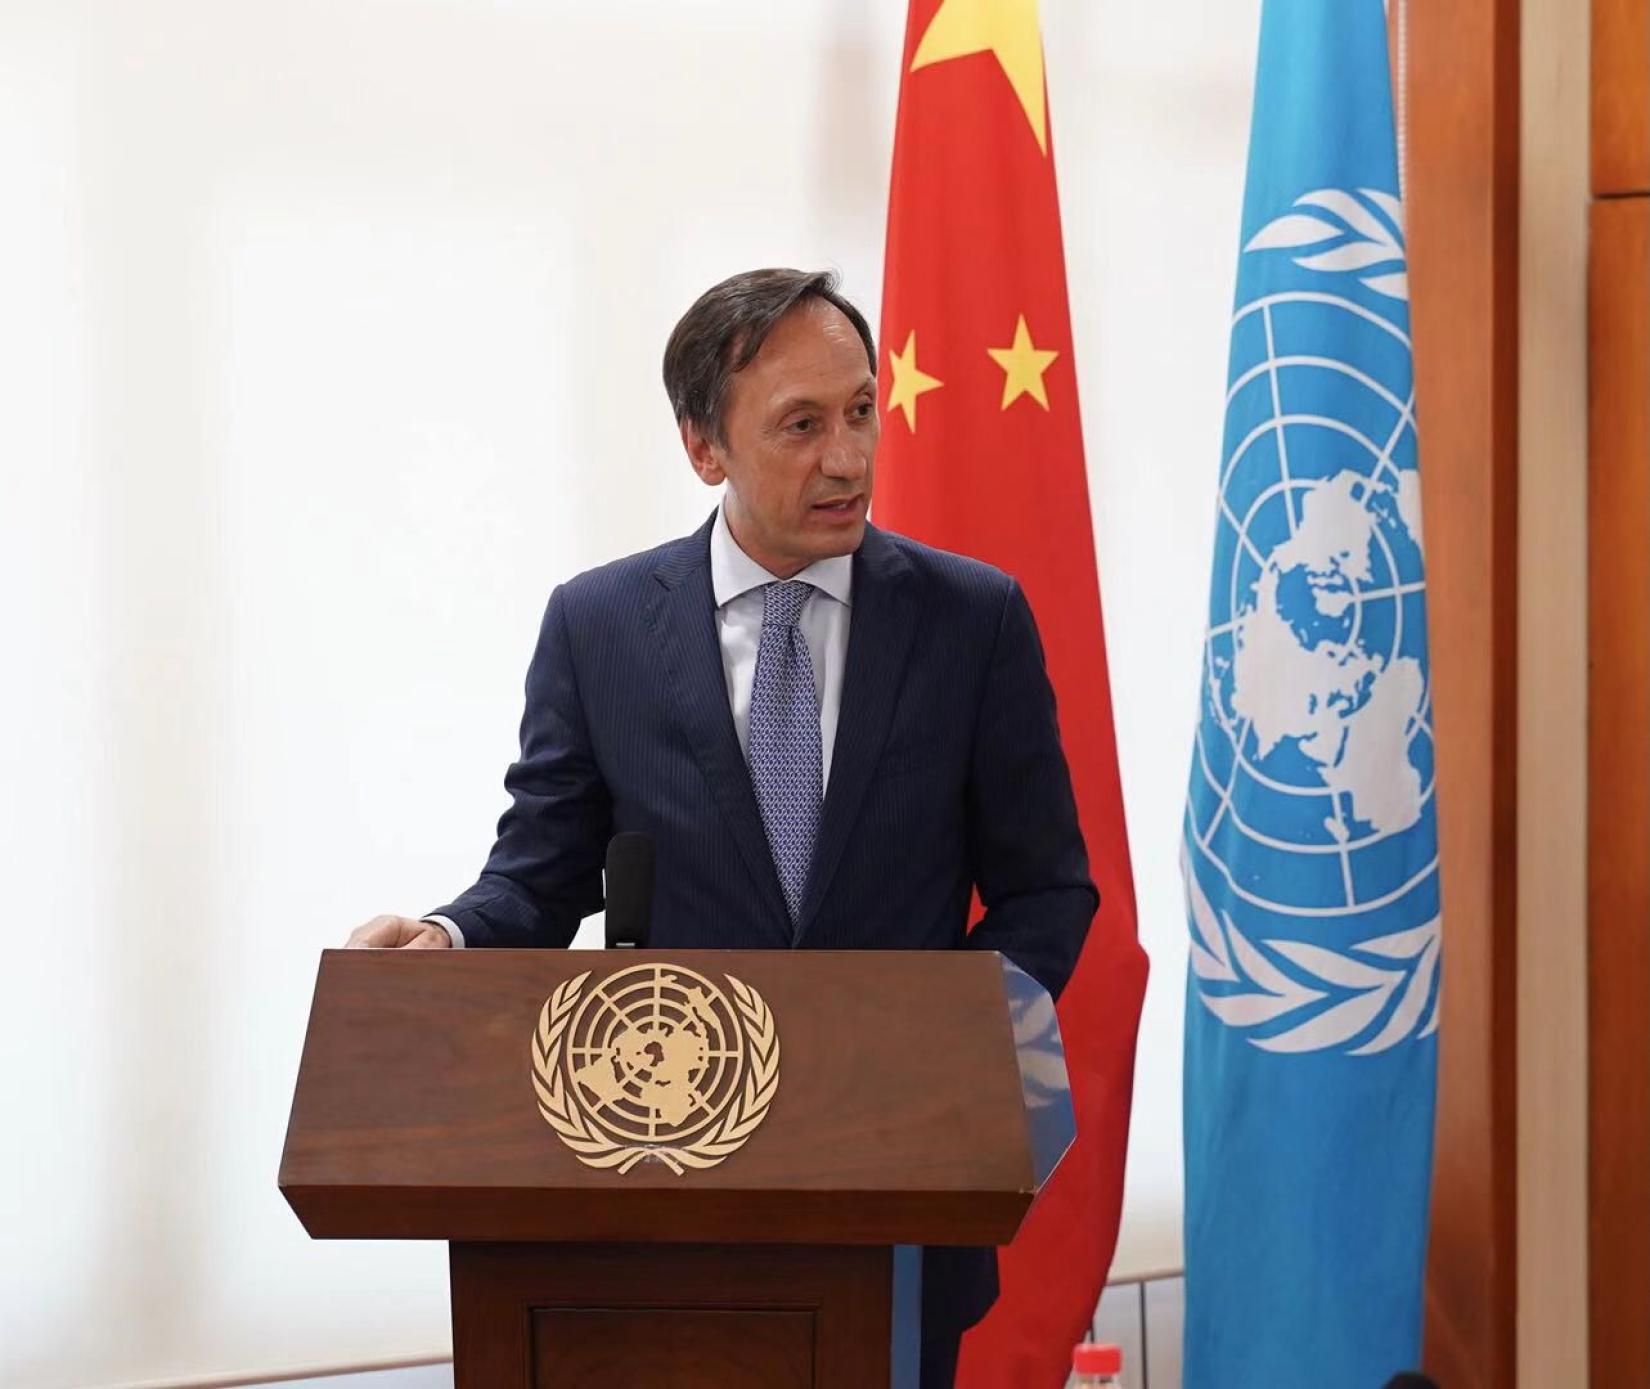 José Augusto Duarte, Ambassador of Portugal to China at Beijing Blue Talks